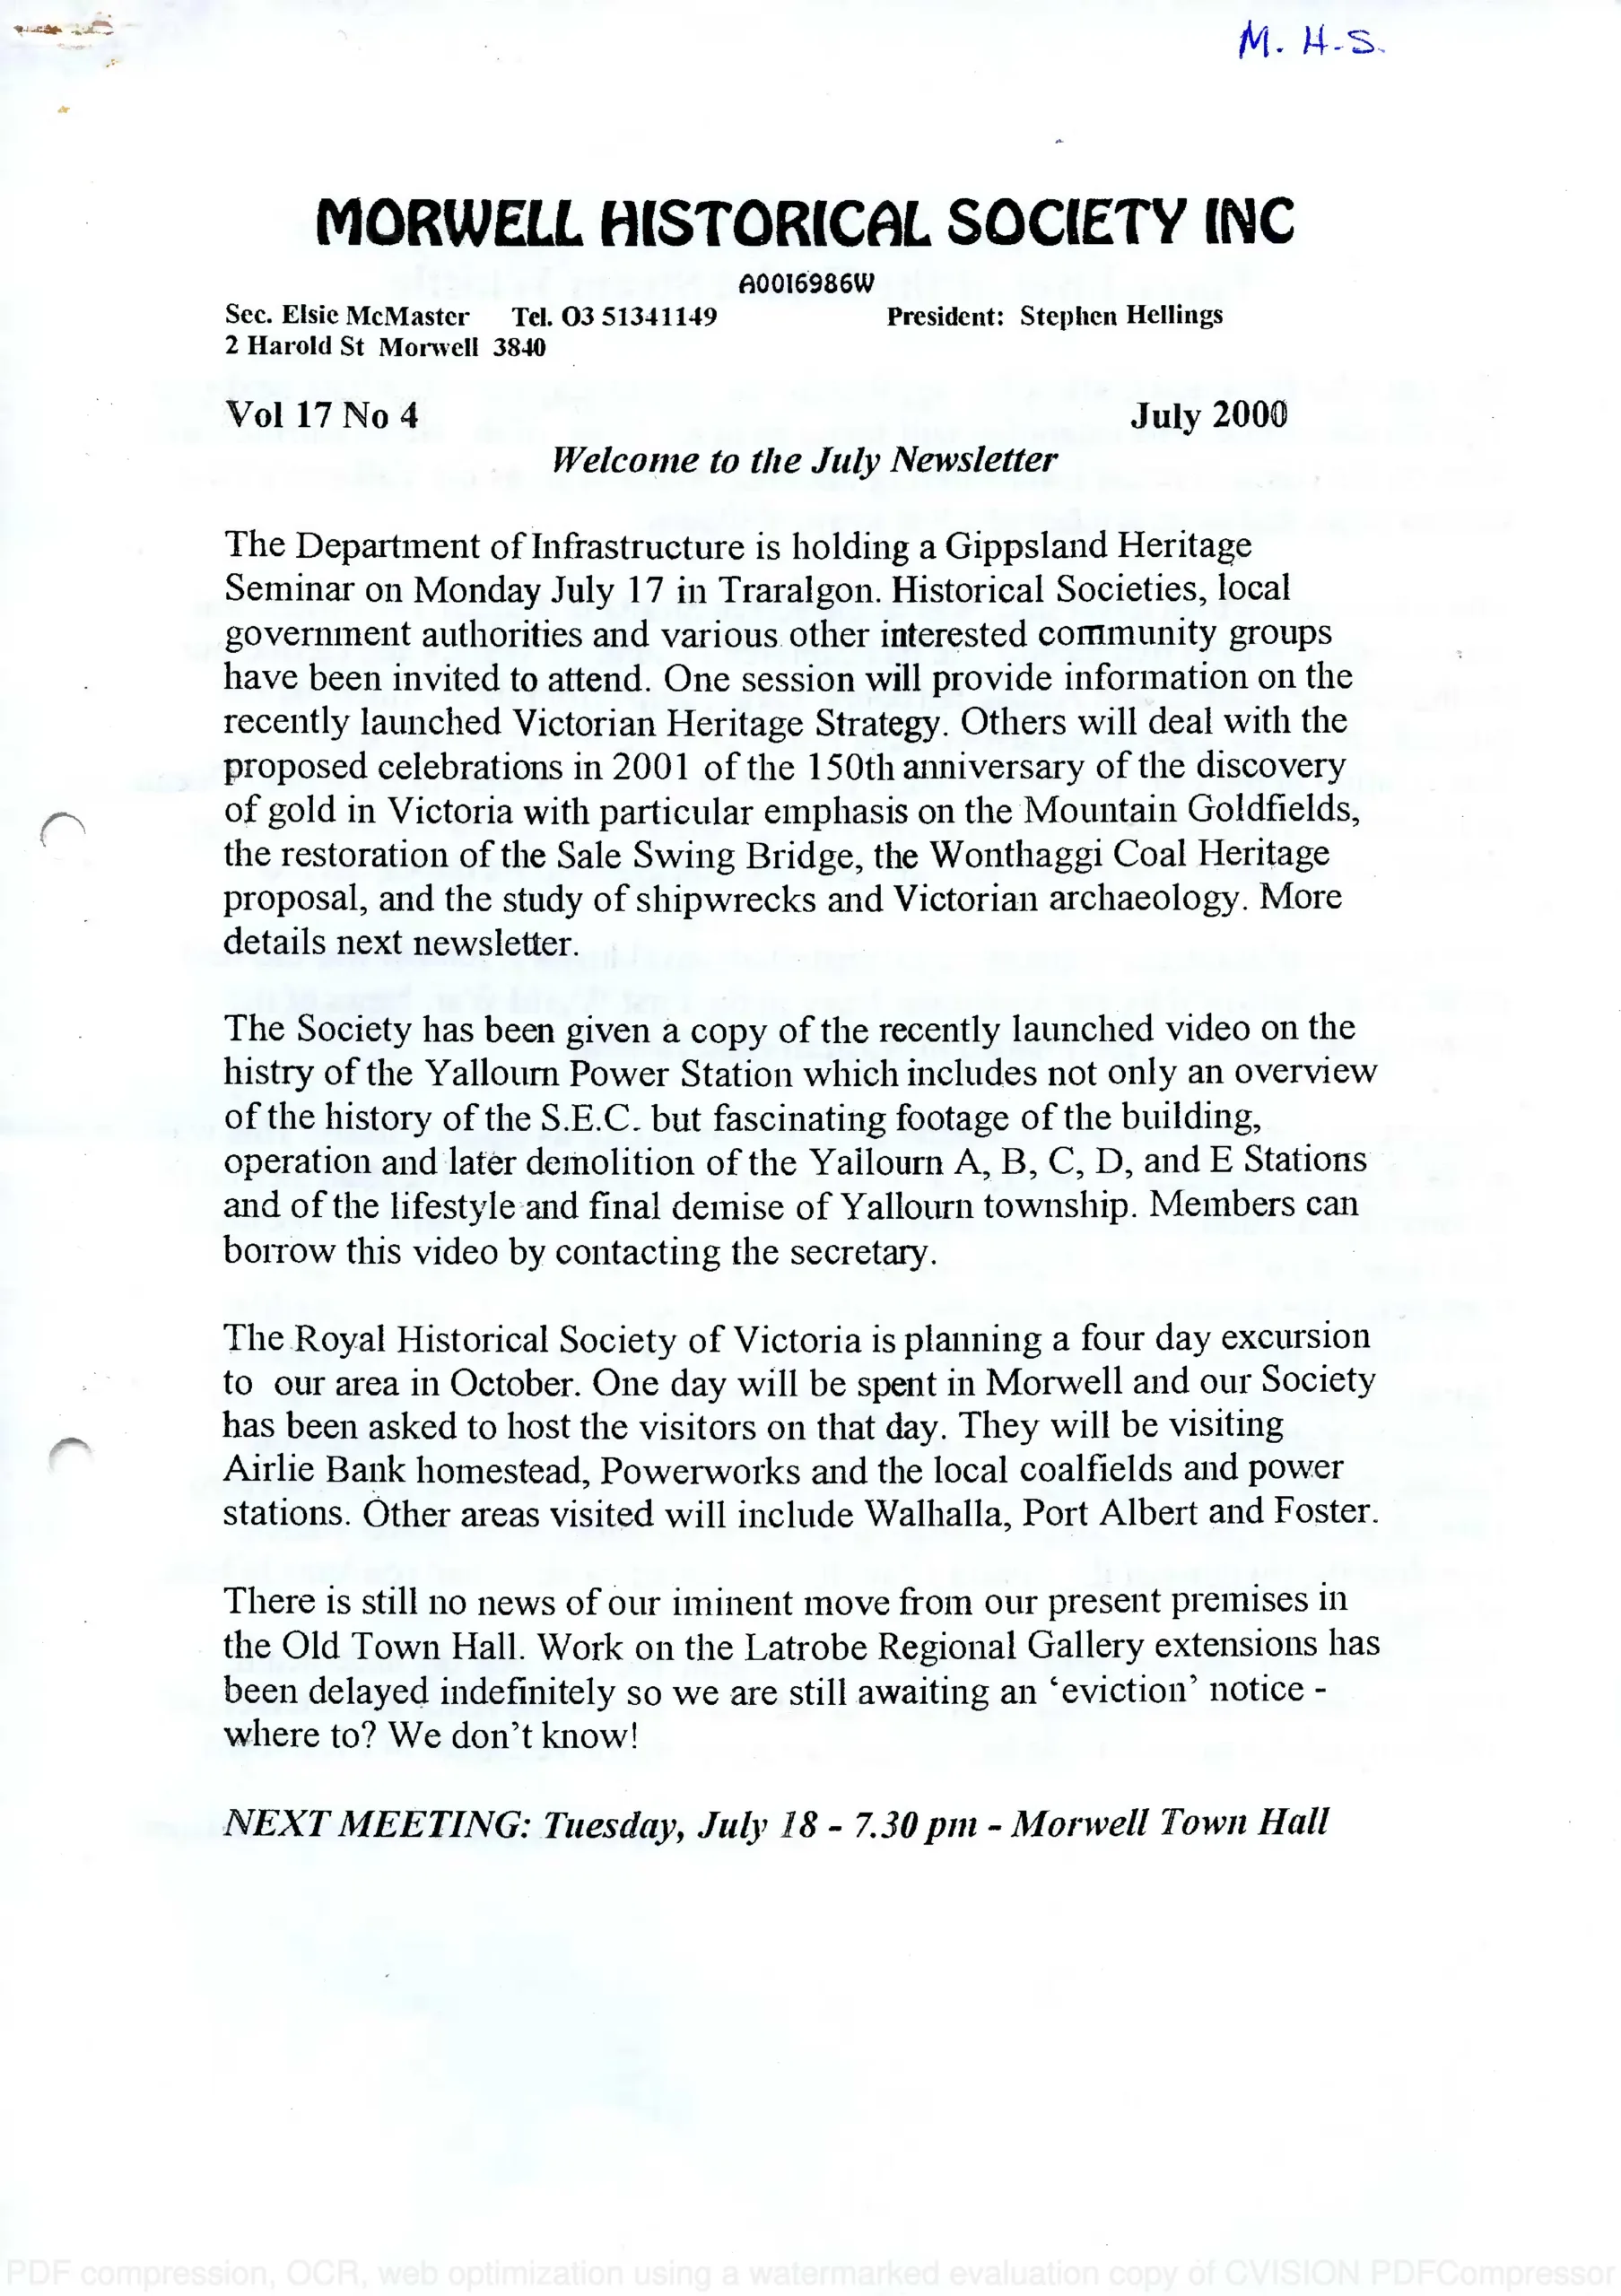 Newsletter July 2000